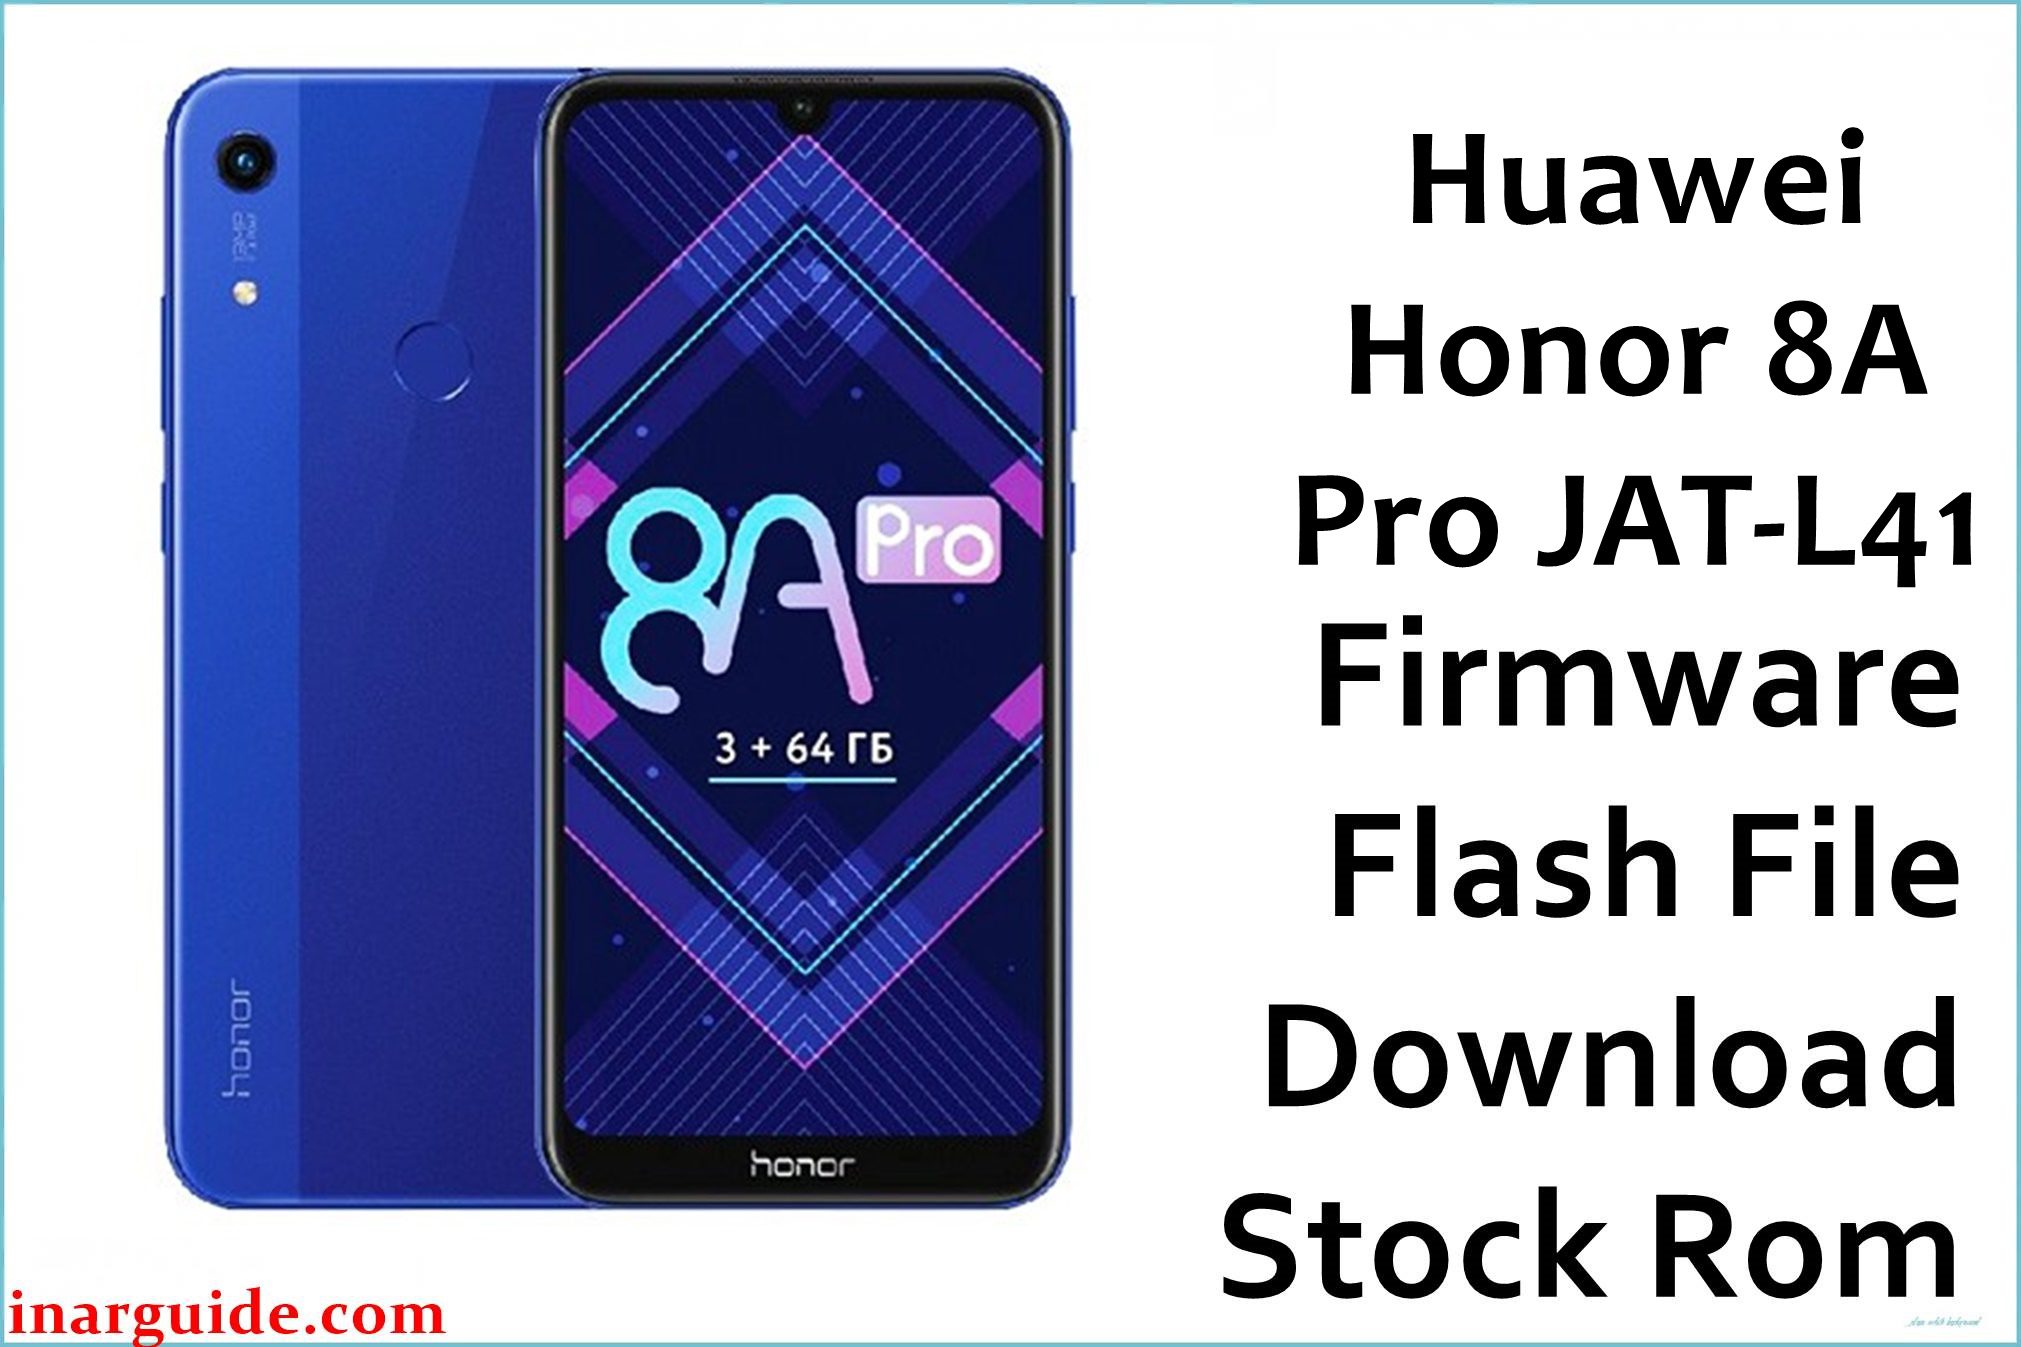 Huawei Honor 8A Pro JAT L41